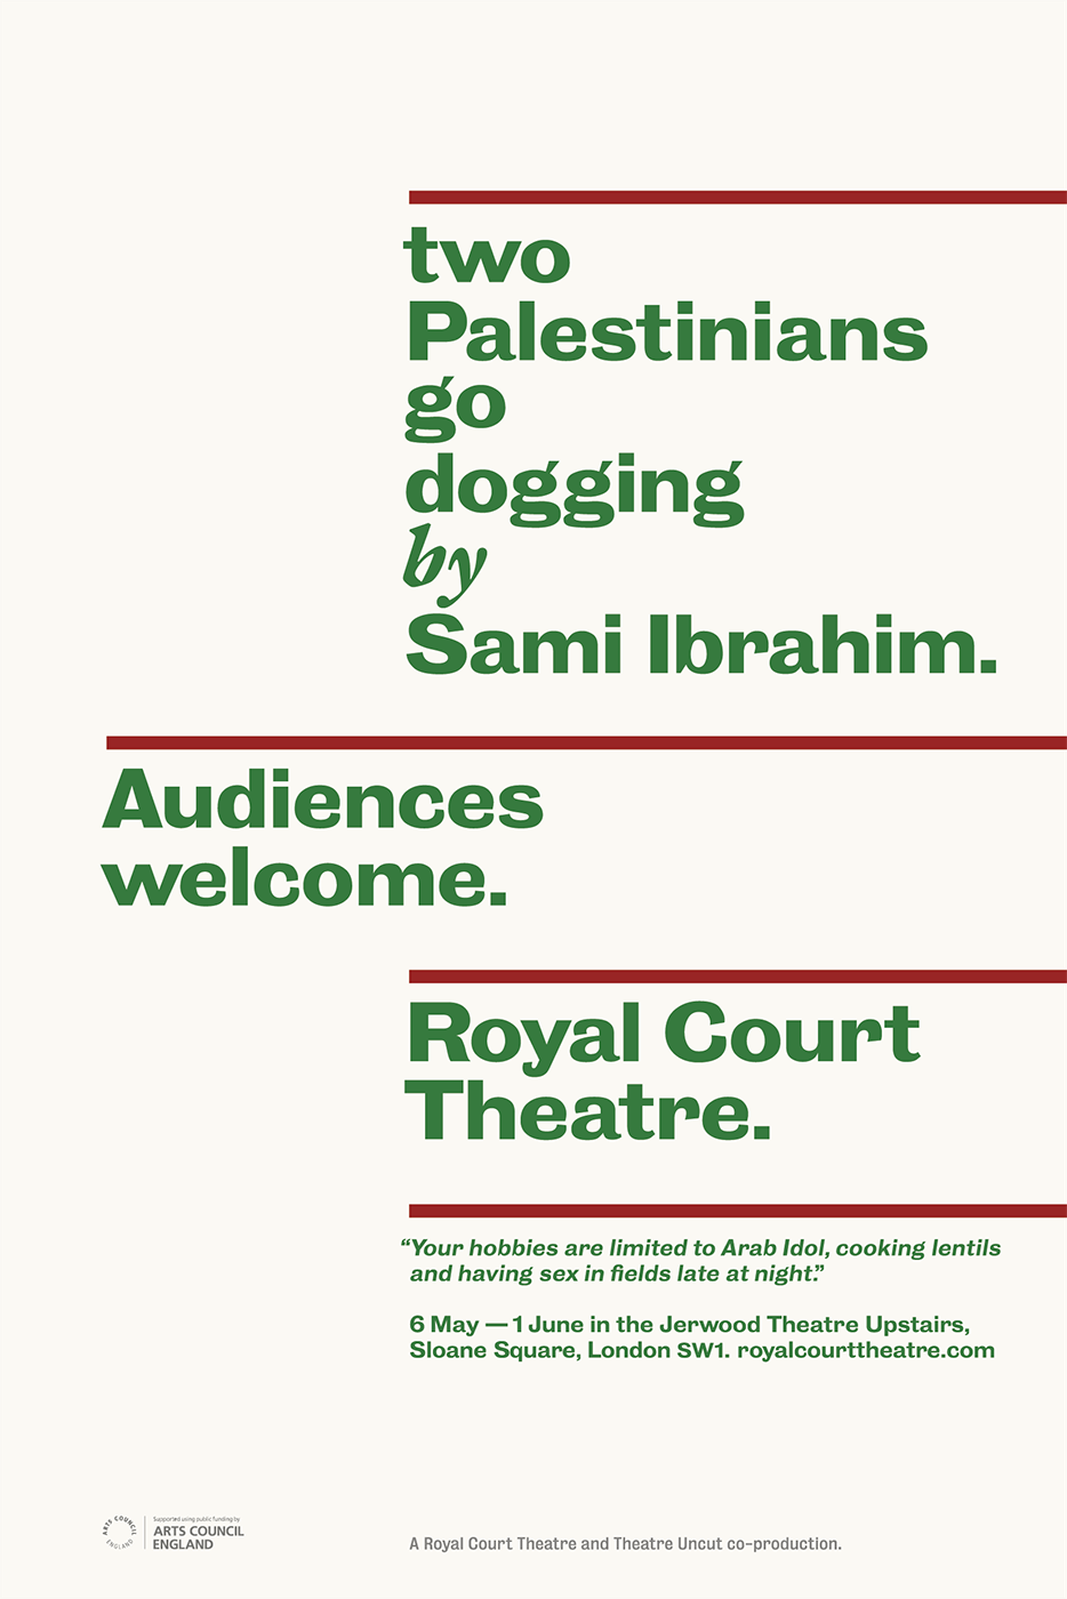 paul_belford_ltd_royal_court_theatre_two_palestinians.png